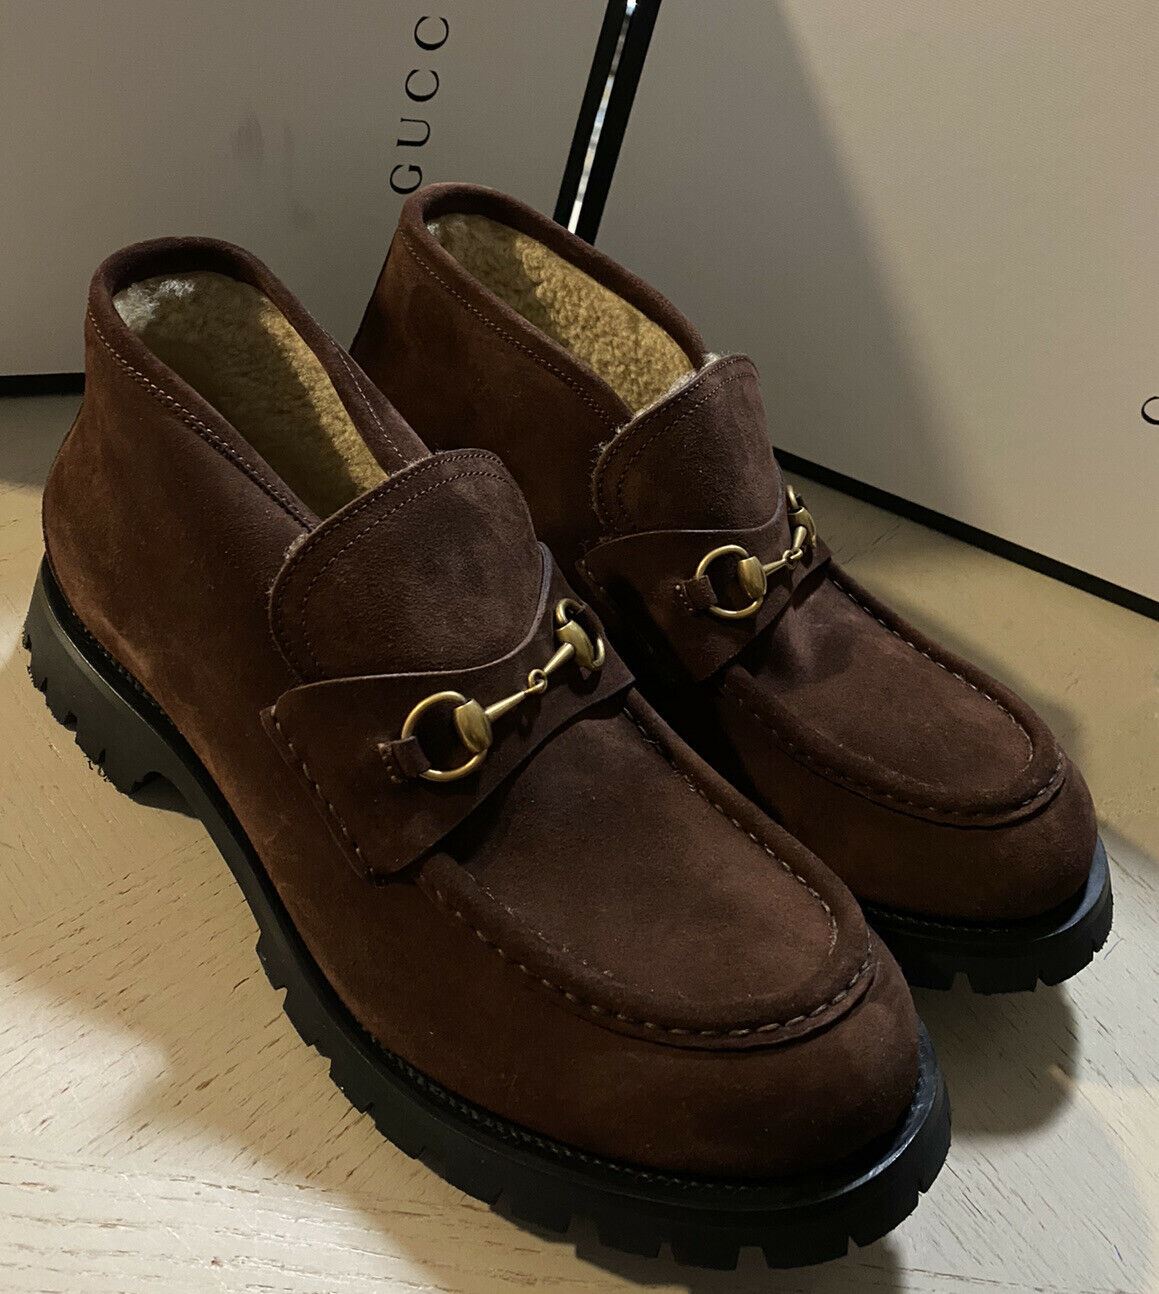 Quagmire ventilation imod NIB $1400 Gucci Men's Suede Ankle Boots Shoes DK Brown 15 US / 14 UK 5 –  BAYSUPERSTORE